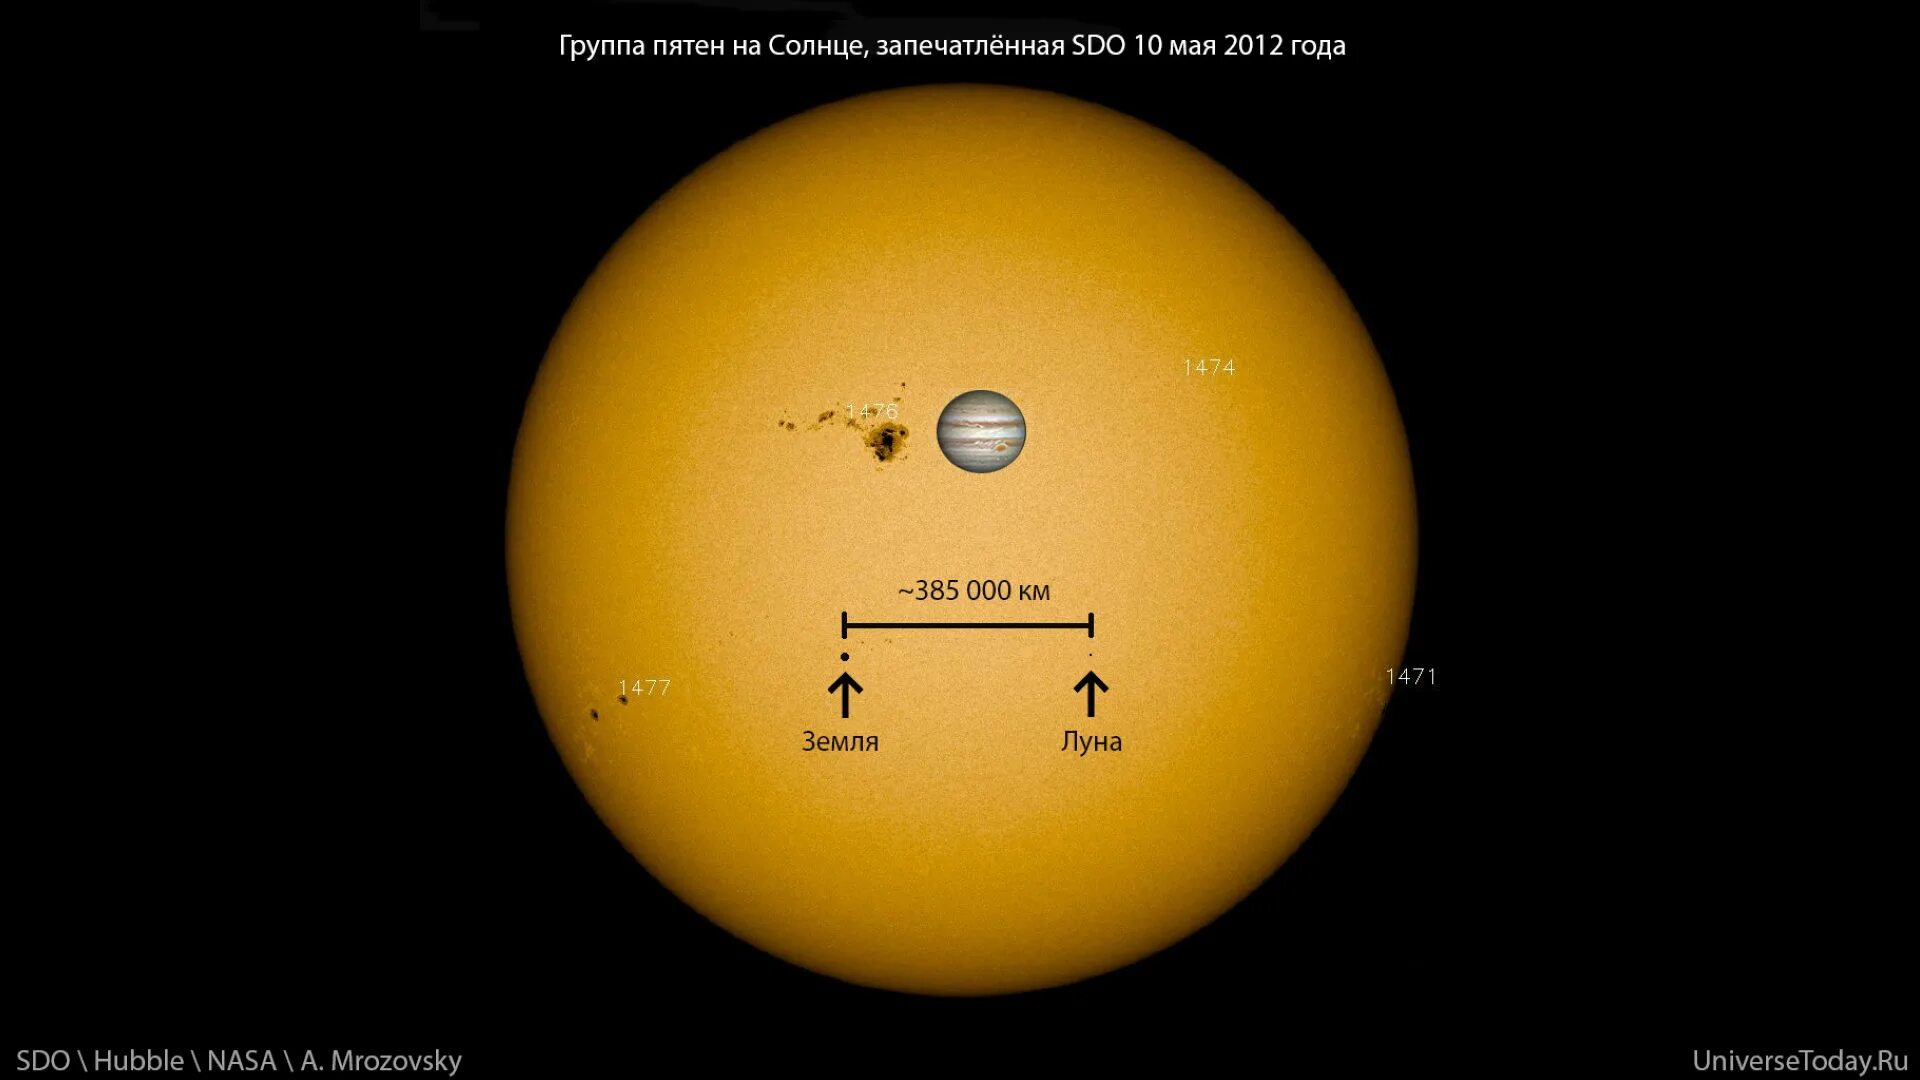 Солнце и земля одинакового размера. Размер солнца и земли. Солнце и земля сравнение размеров. Сравнение размеров солнца. Сопоставление размеров земли и солнца.